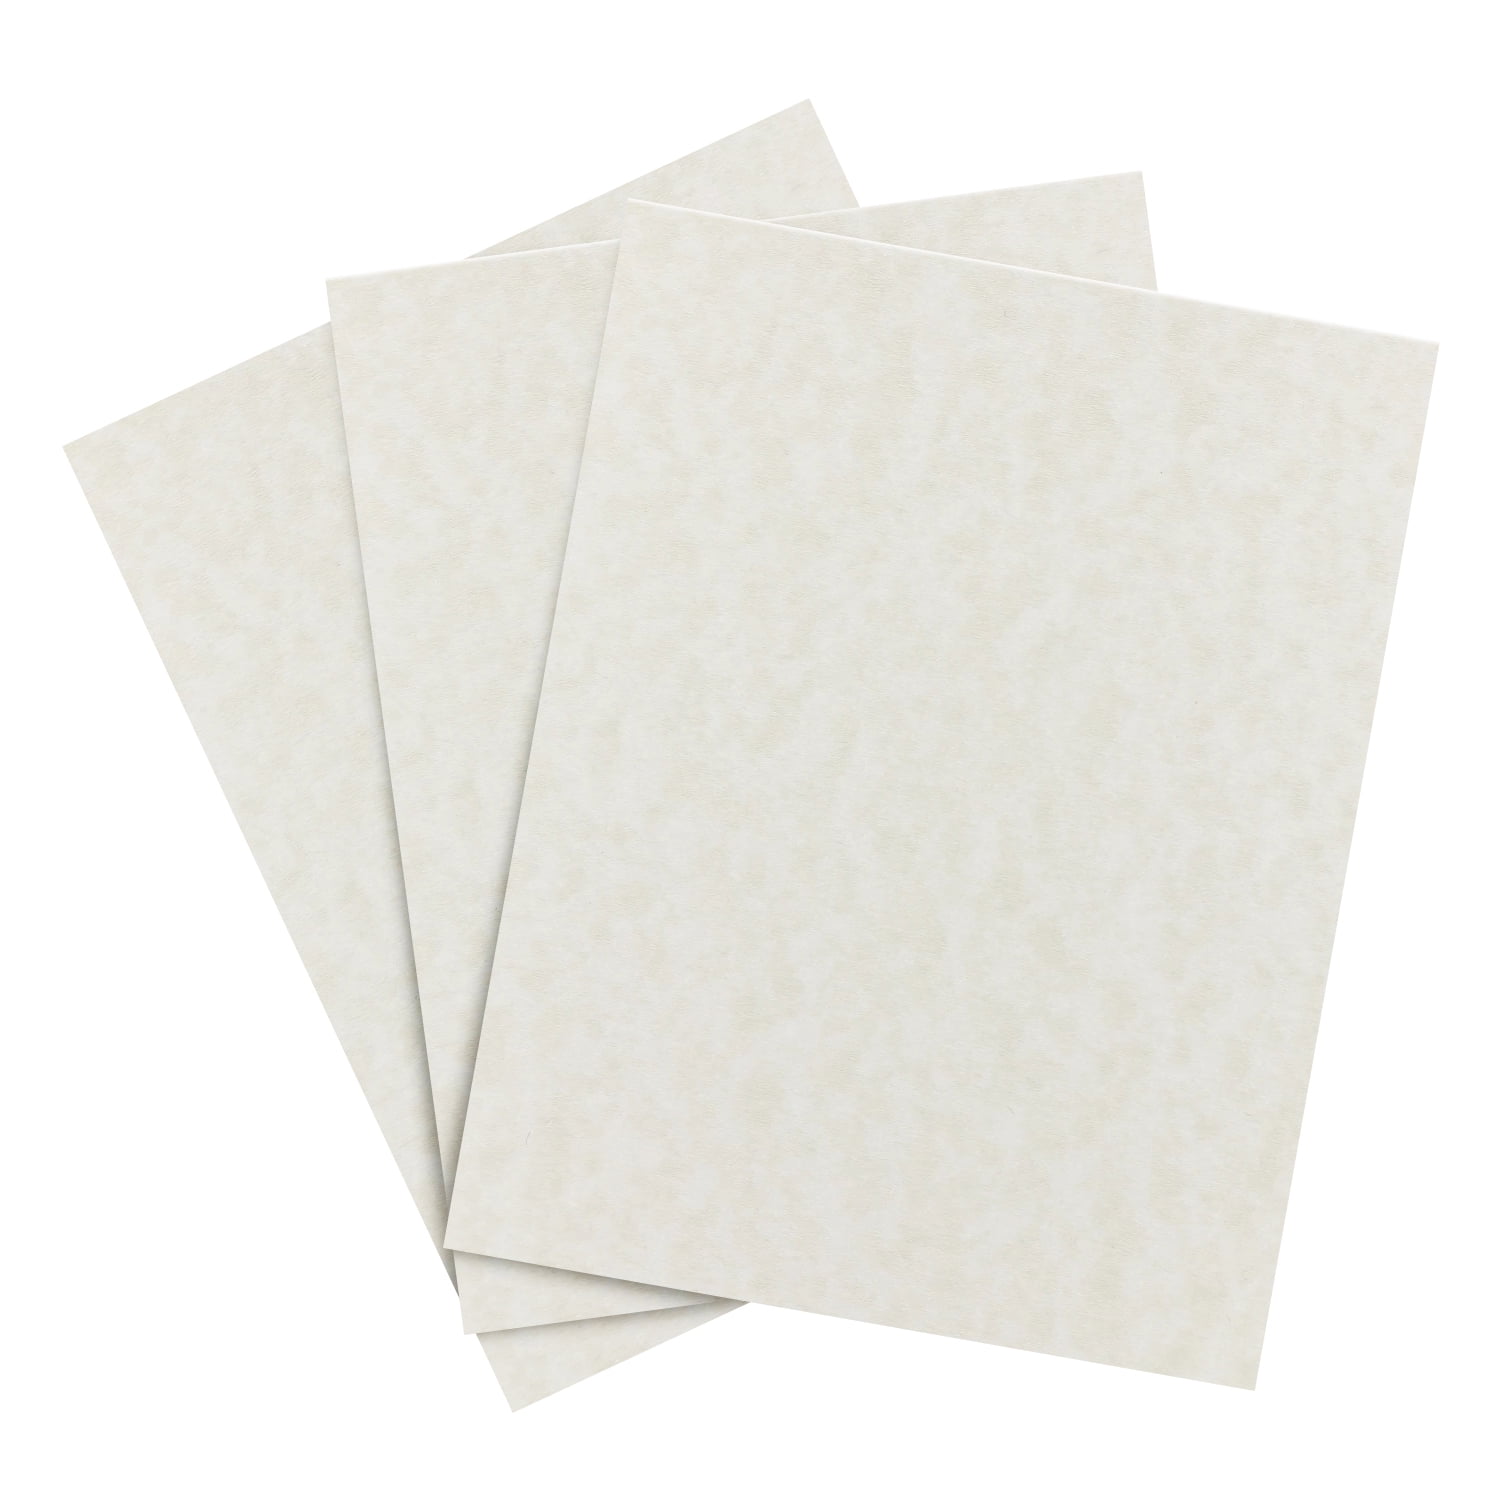 Craft Perfect Vellum Paper 8.5 inchx11 inch 10/Pkg-Pure White